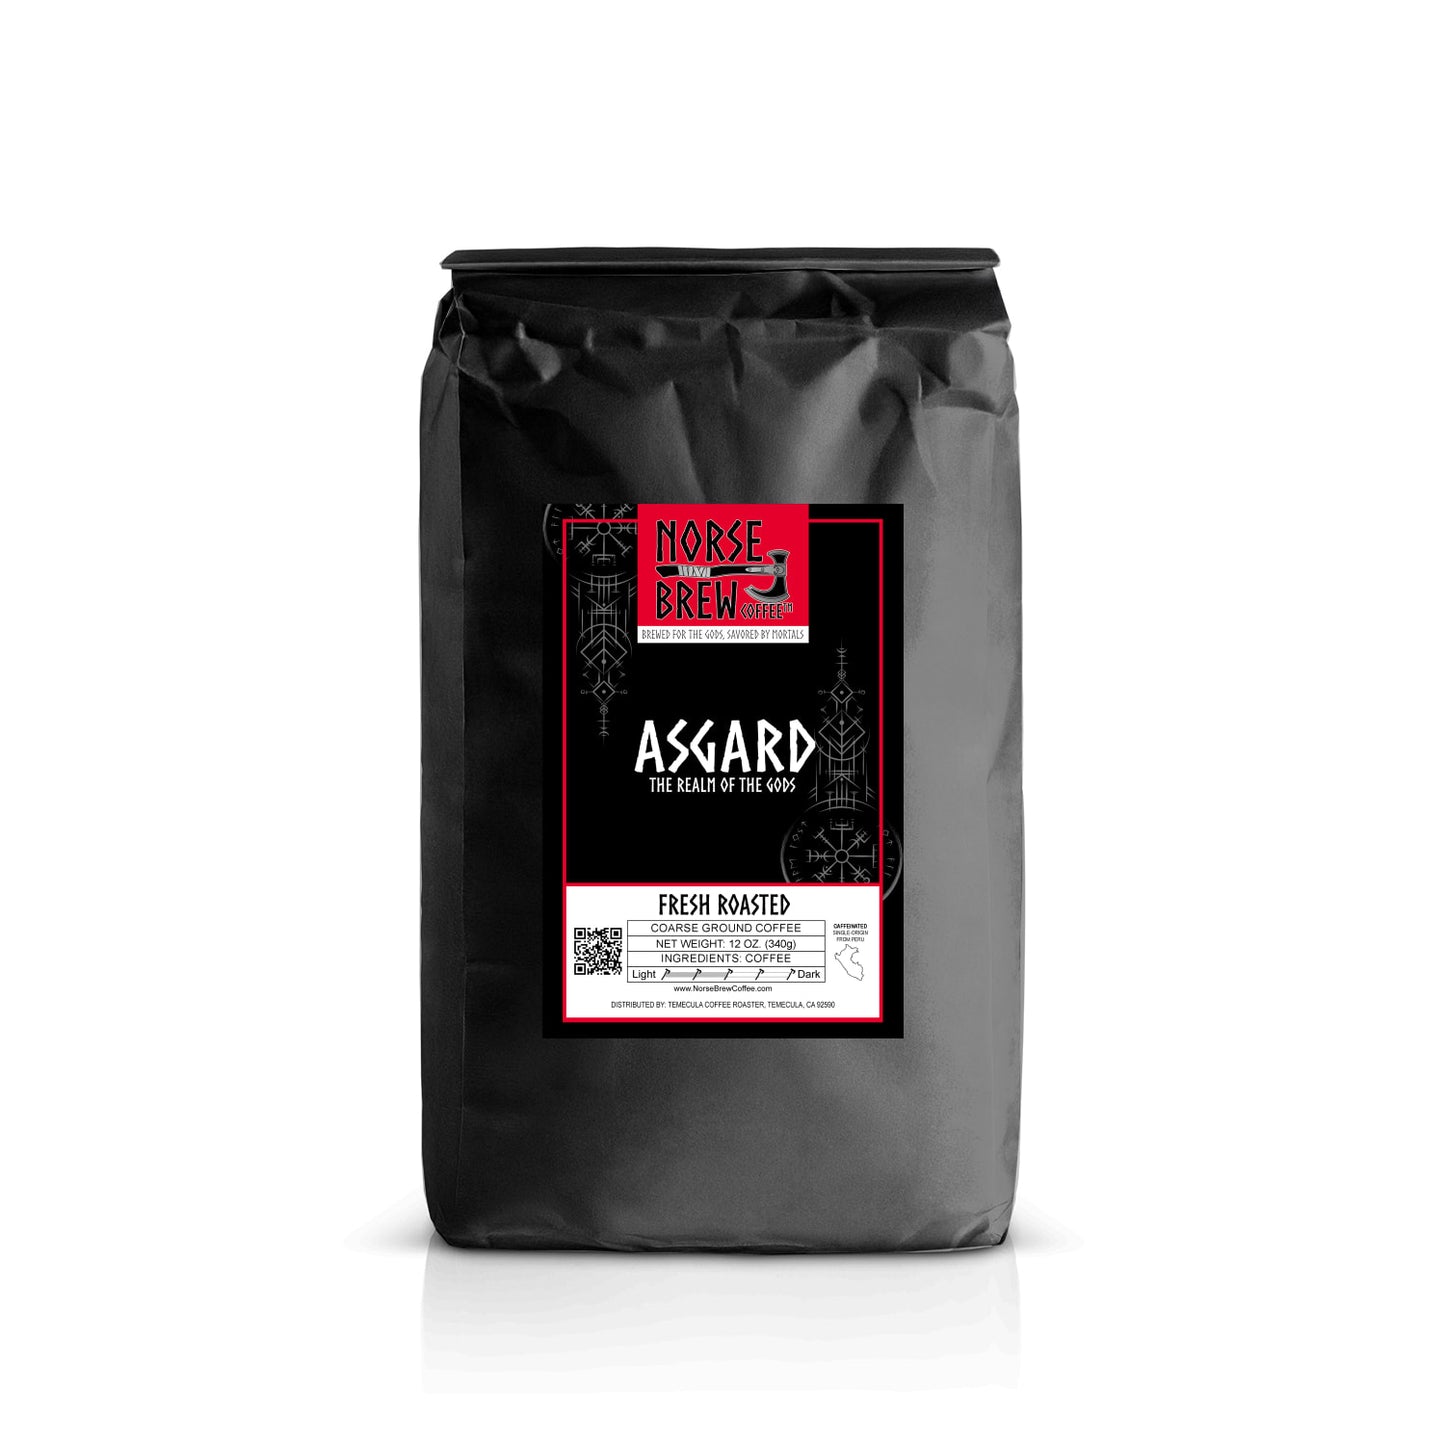 12 oz Bag of Asgard Medium Roast Ground Coffee Sourced from Piura, Peru